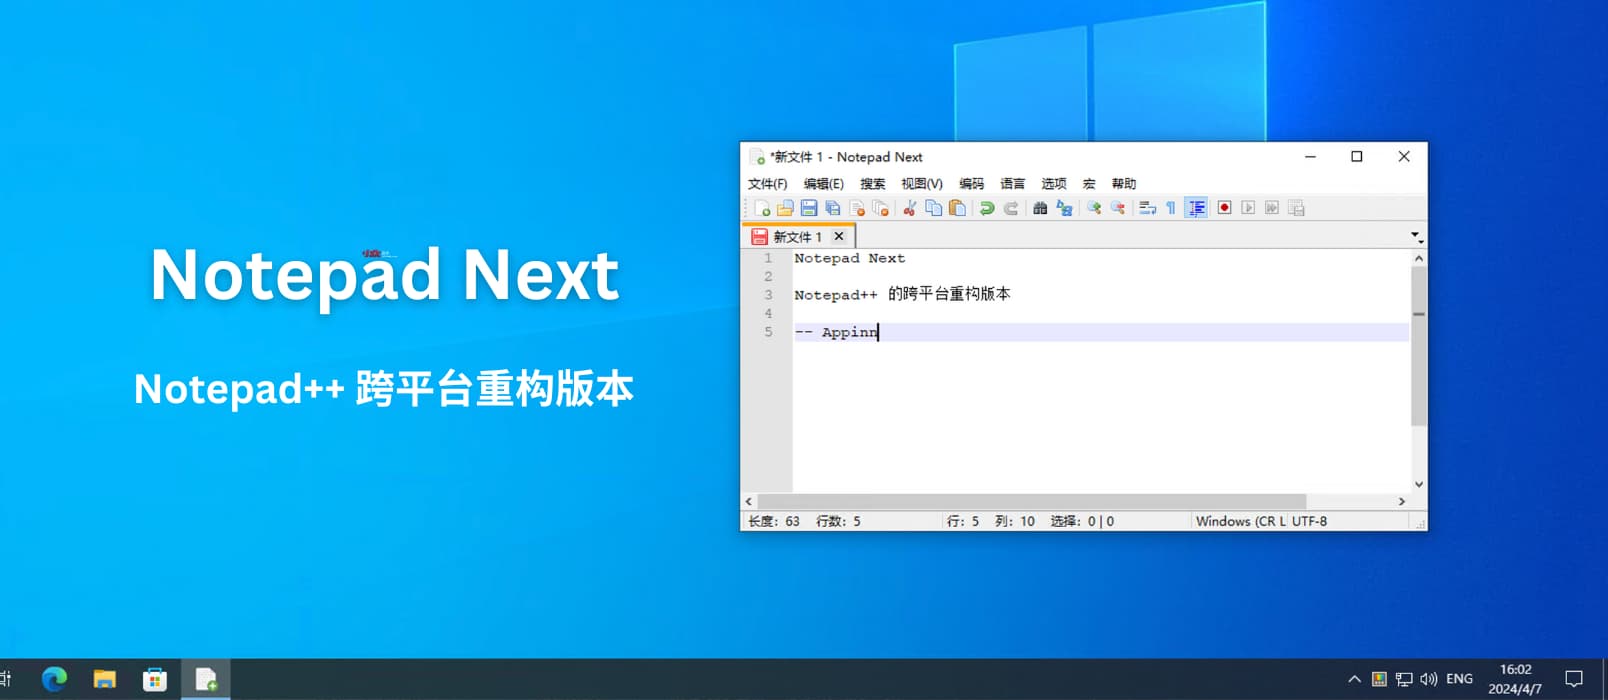 Notepad Next – 开源源代码编辑，Notepad++ 的跨平台重构版本